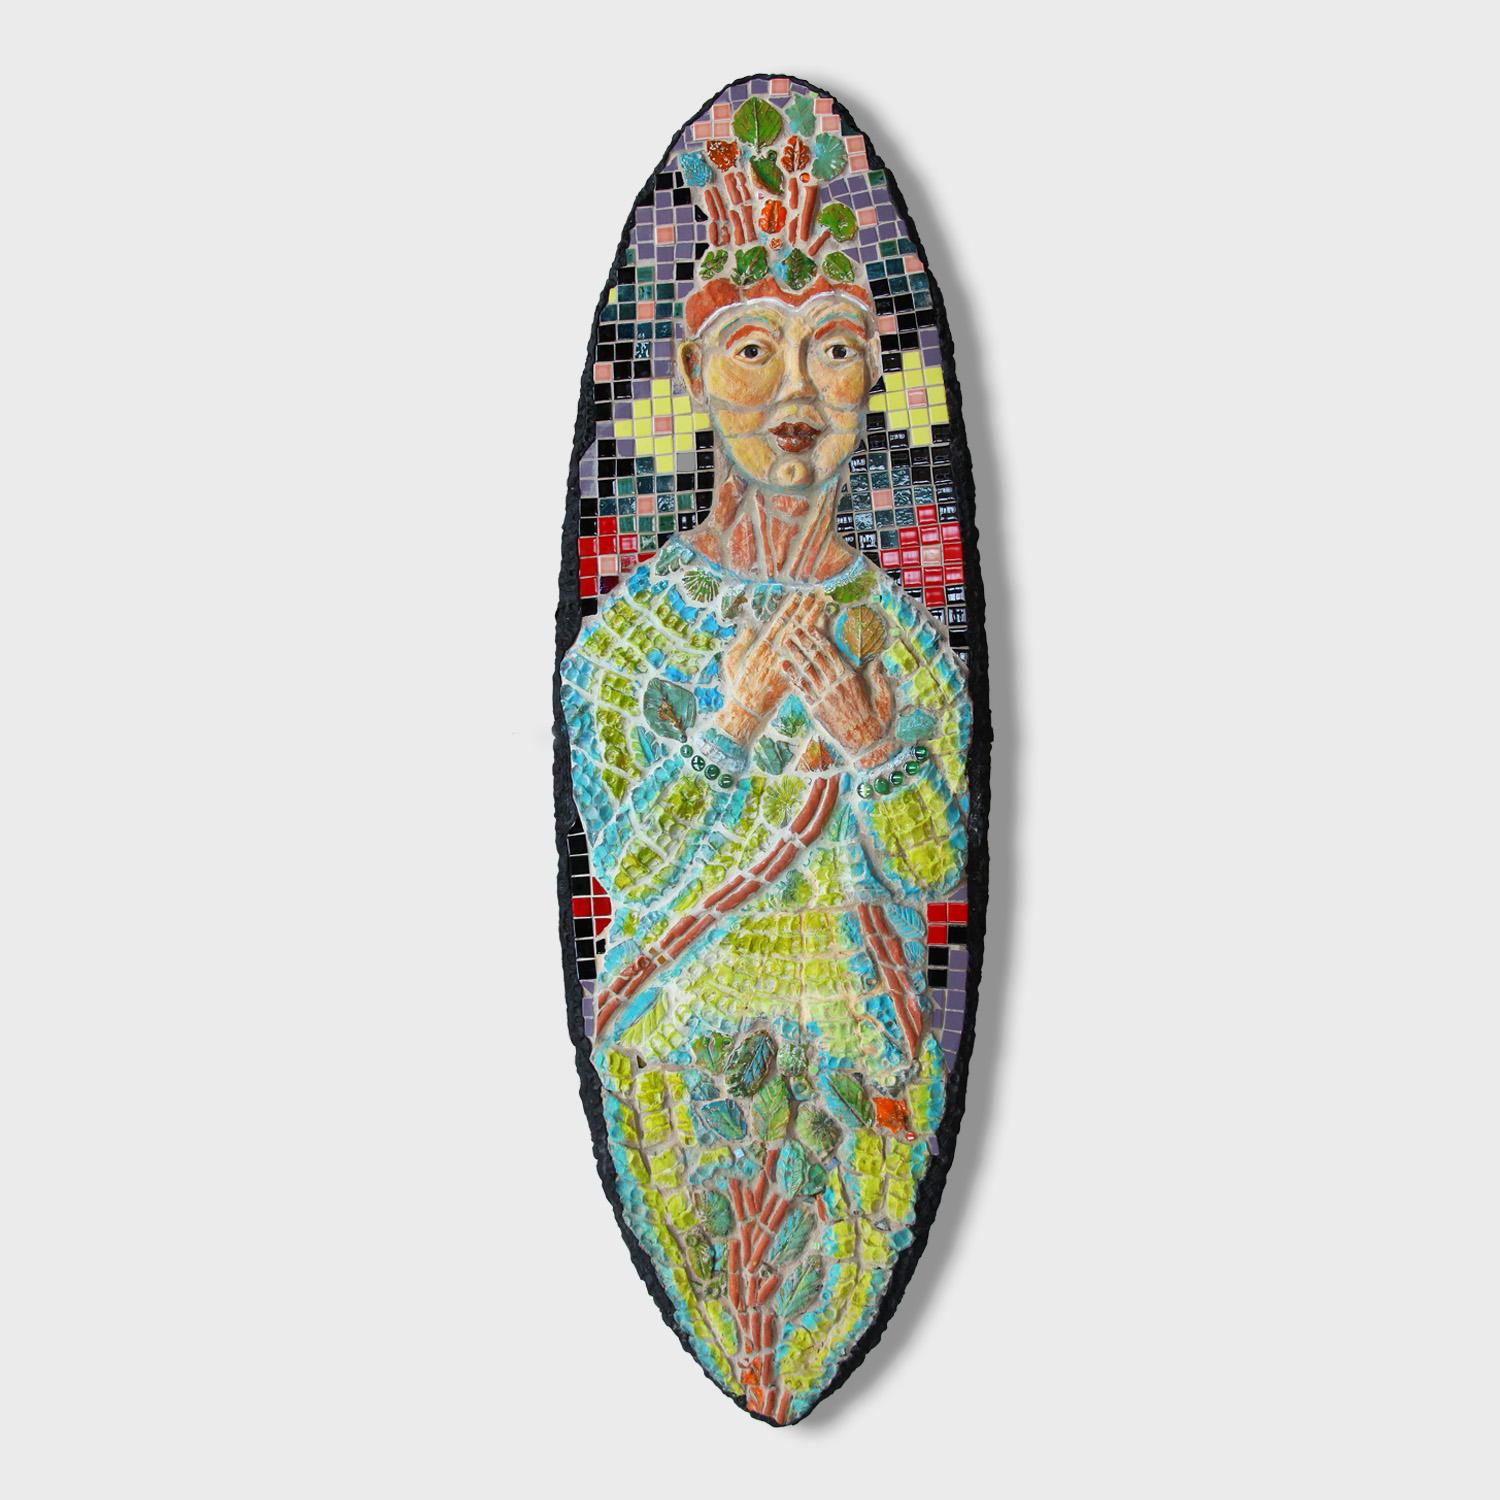 Cheryl Tall Figurative Sculpture - Surrealist Mosaic Surfboard, "Kailini"